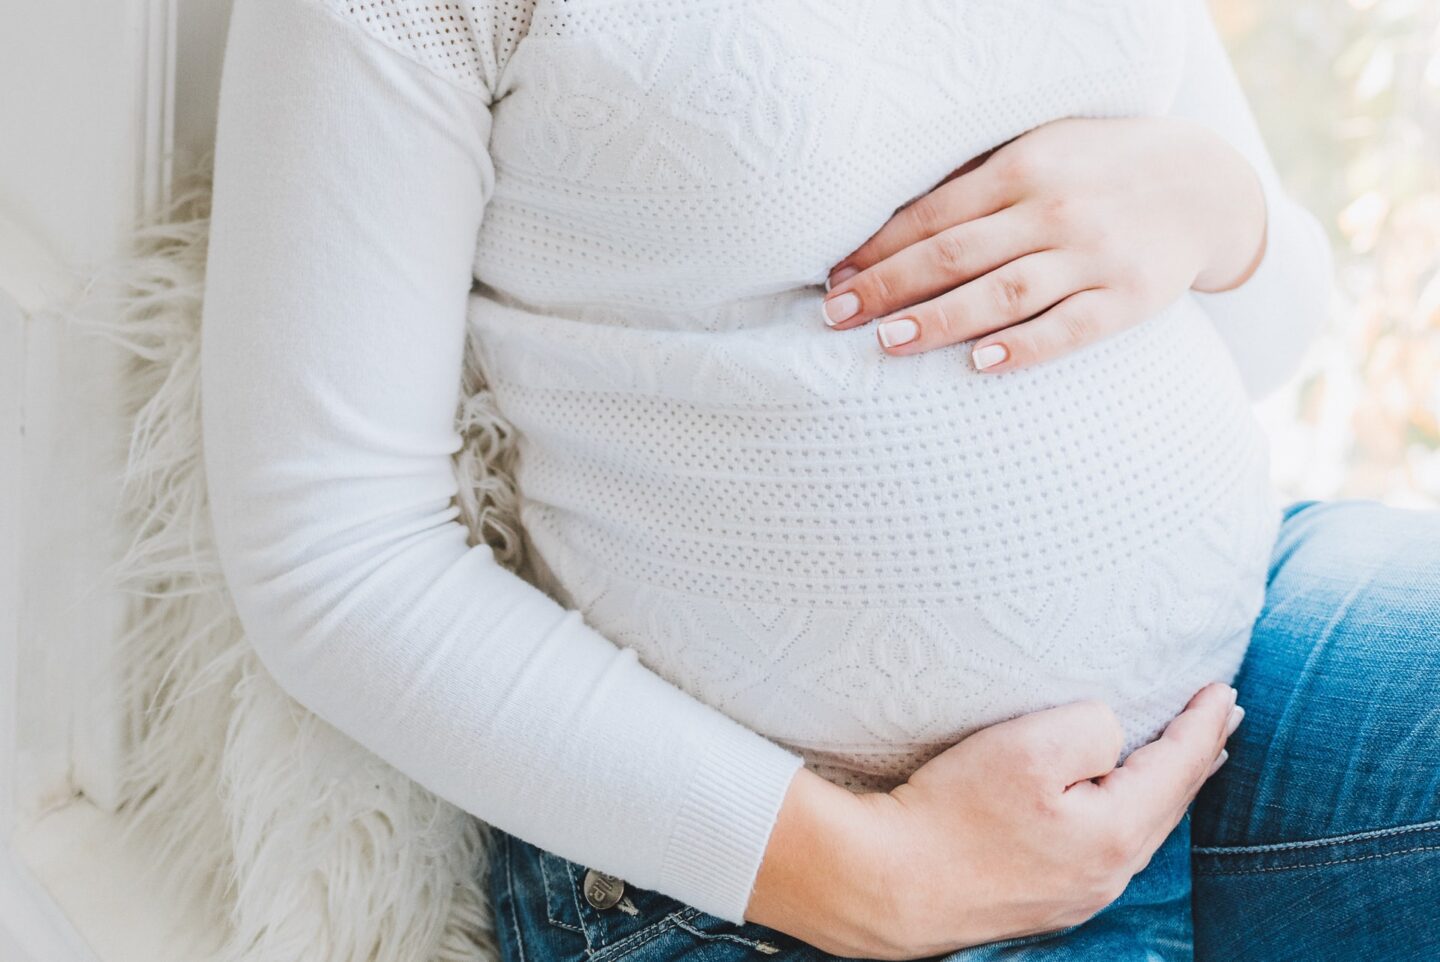 Boy or girl pregnancy? Signs you're having a girl pregnancy - baby girl